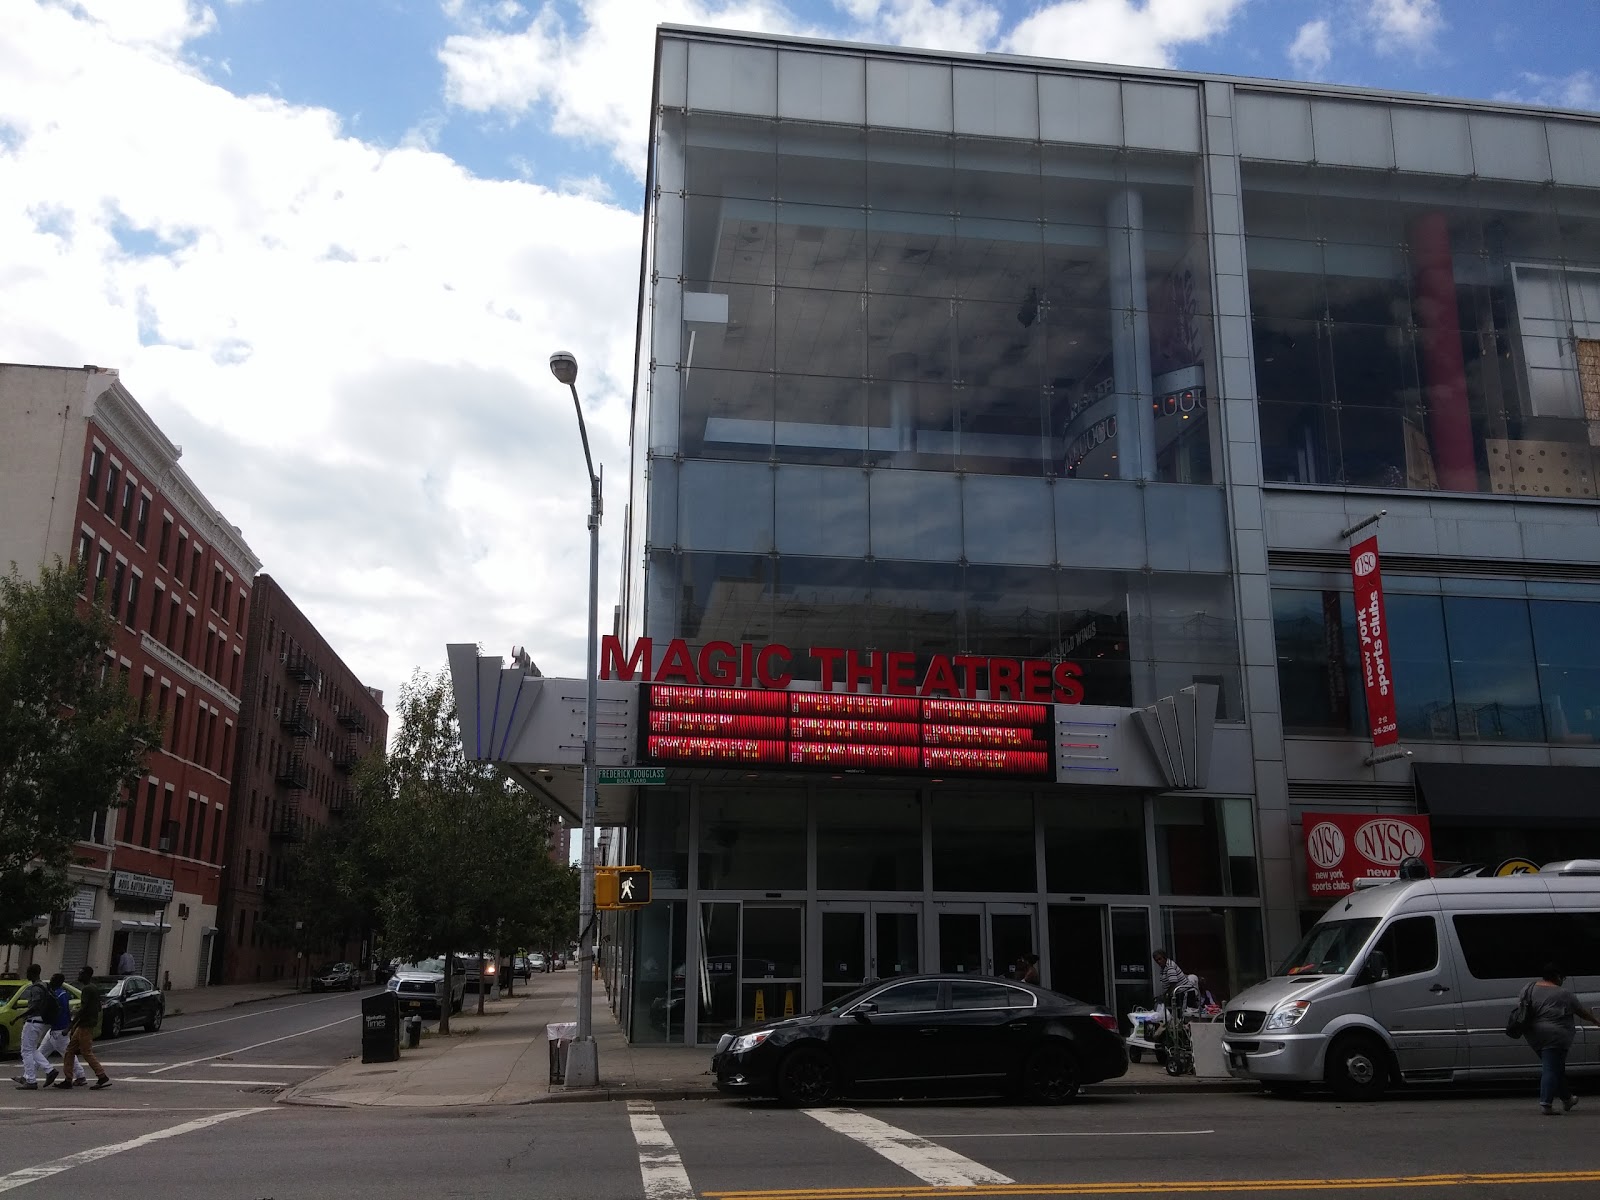 Photo of AMC Magic Johnson Harlem 9 in New York City, New York, United States - 2 Picture of Point of interest, Establishment, Movie theater